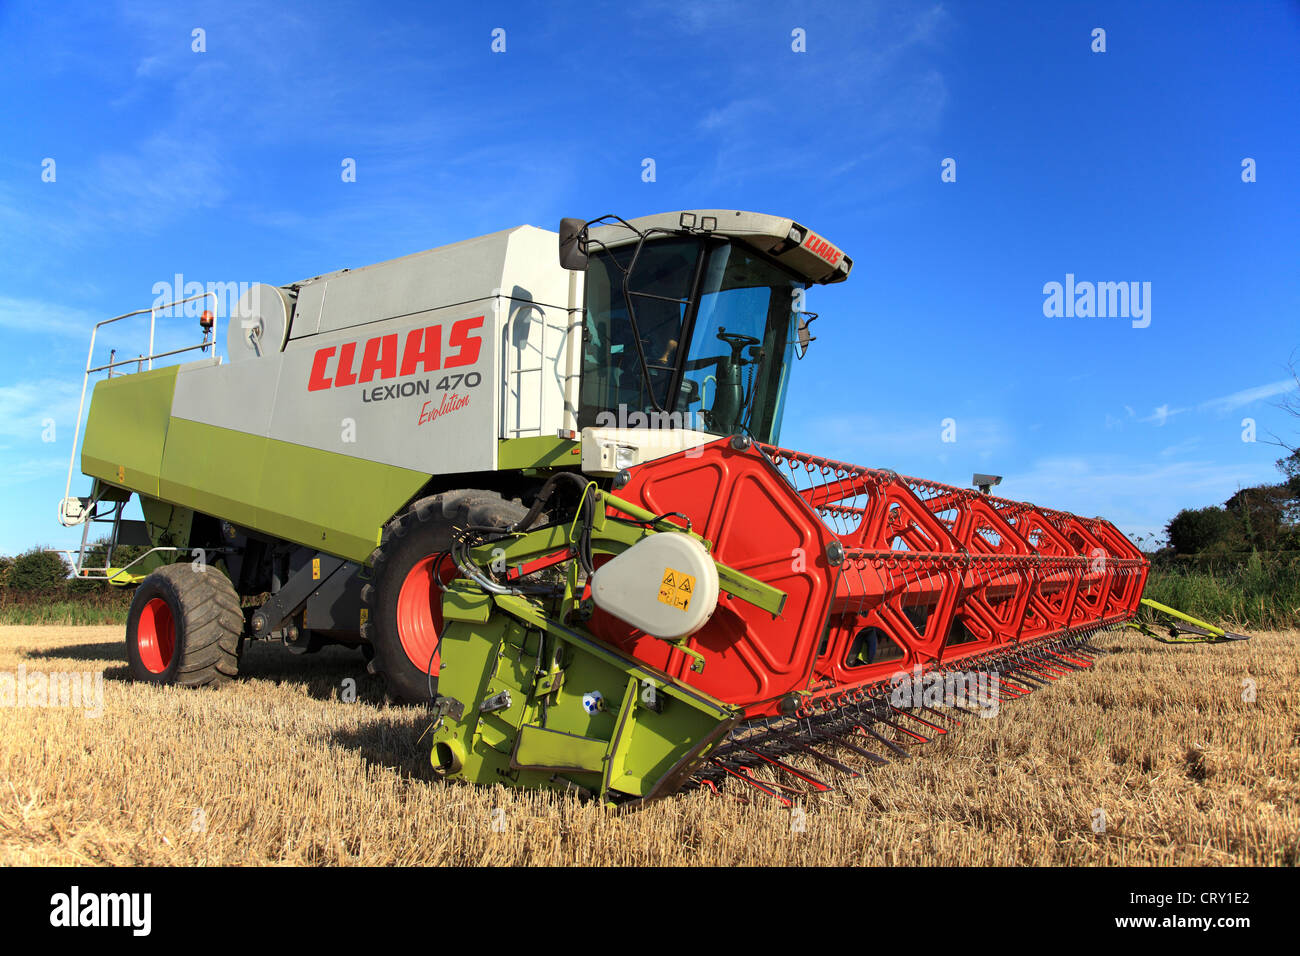 Claas Lexion 470 Evolution Combine Harvester. Set against a blue sky Stock Photo